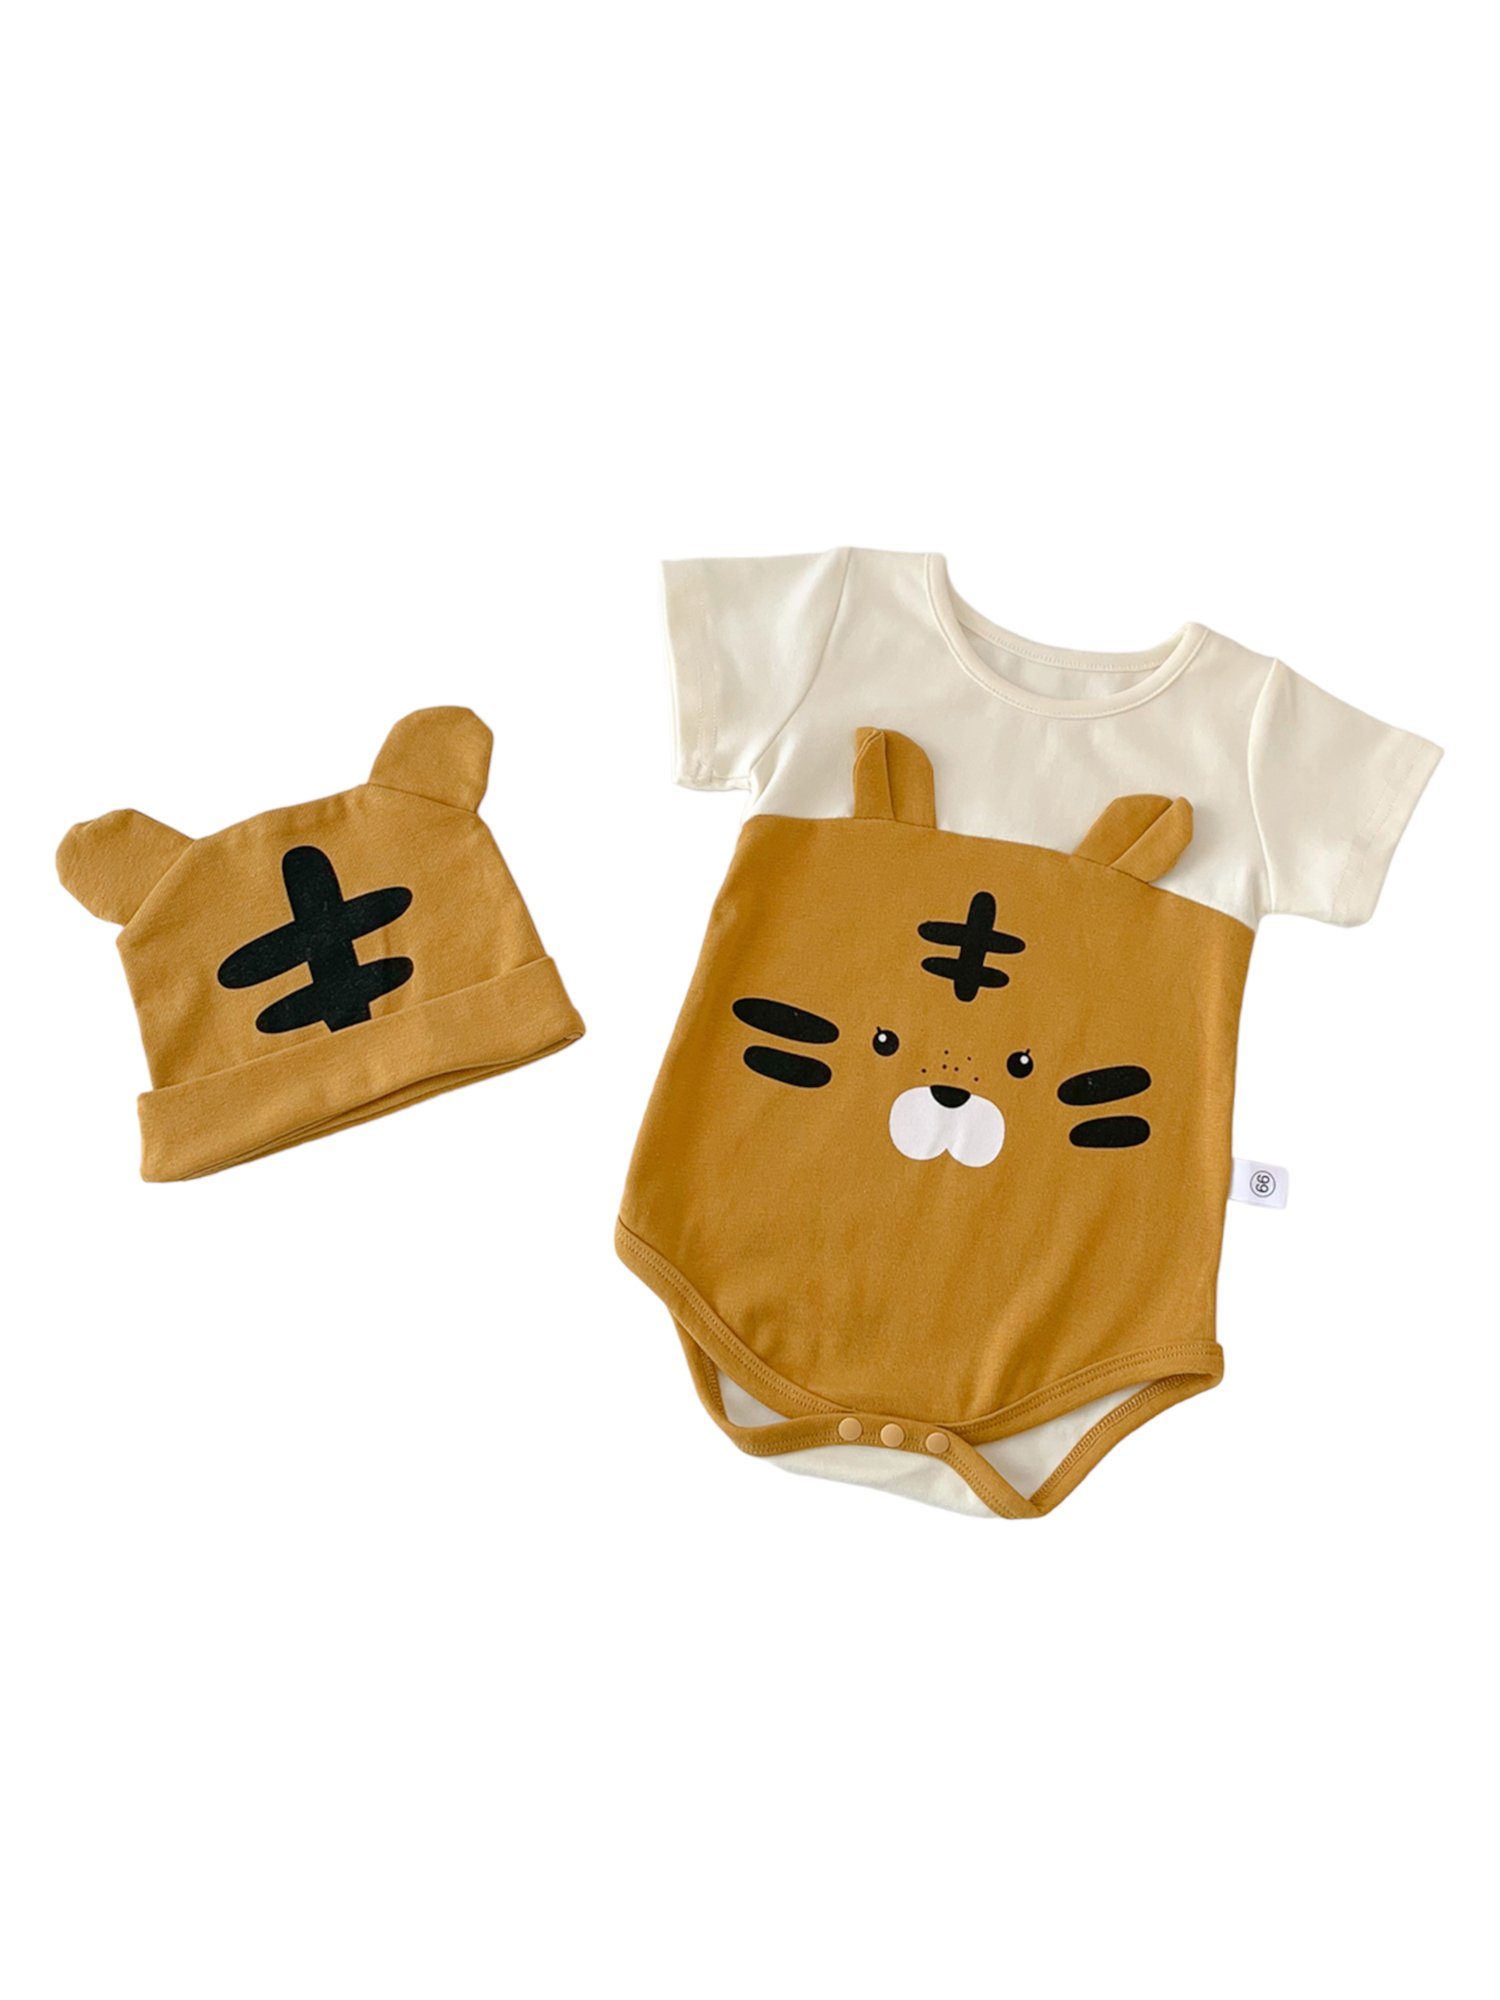 LAPA Strampler Baby Sommer Strampler Anzug mit Cartoon-Tiger-Druck